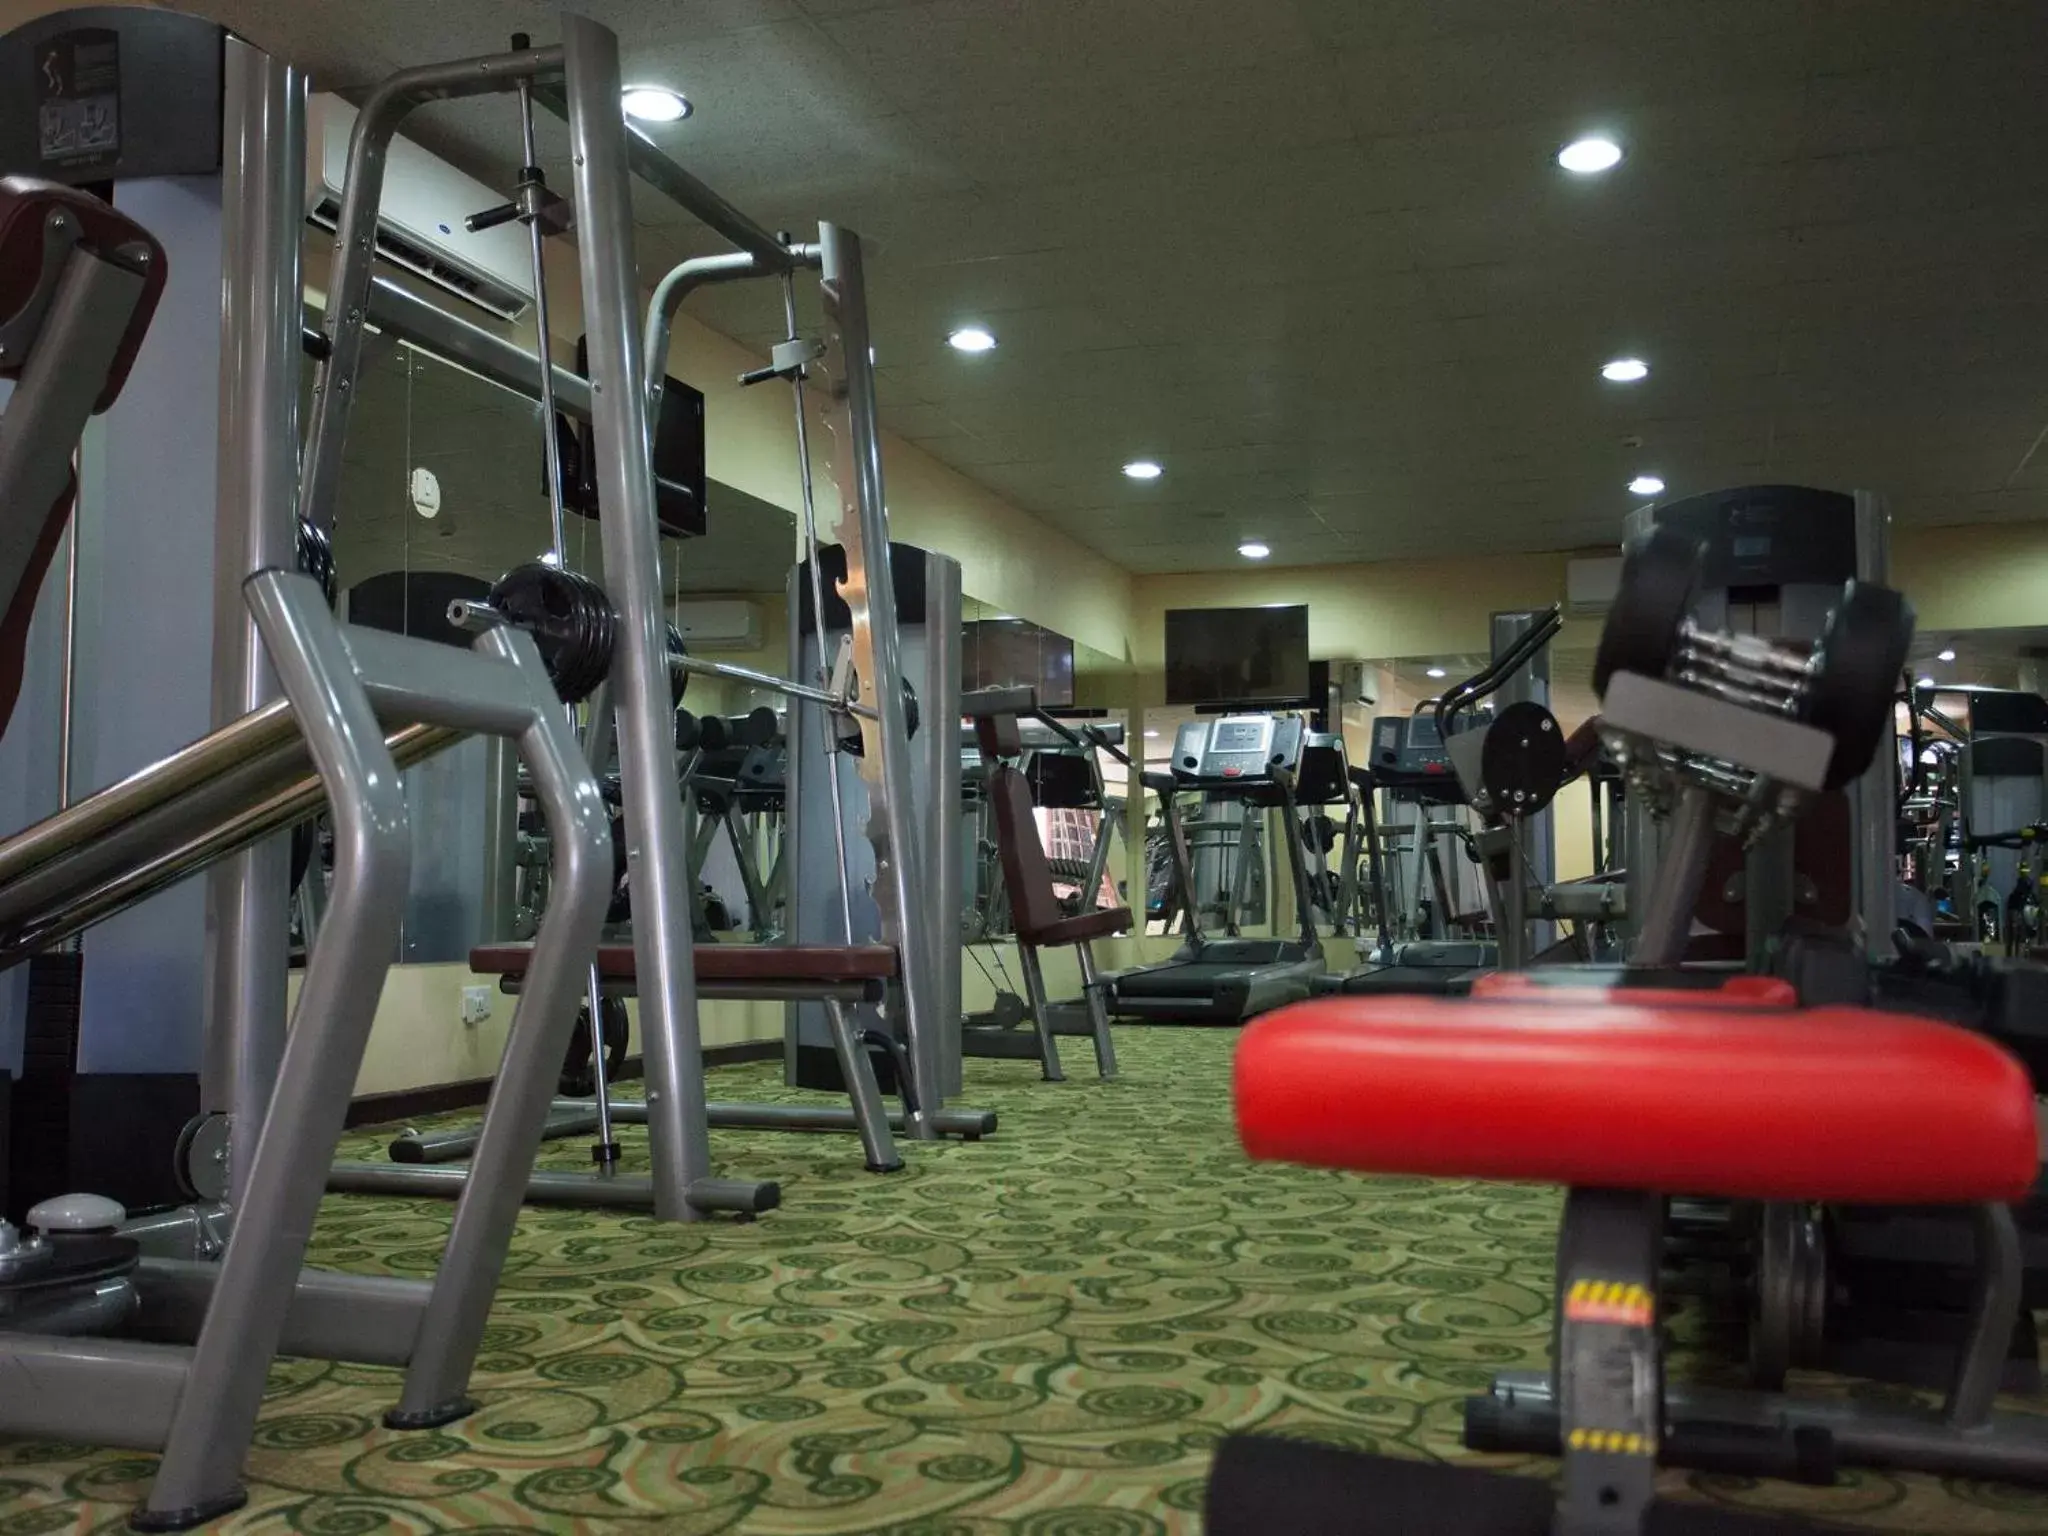 Fitness centre/facilities, Fitness Center/Facilities in Sunbird Mount Soche